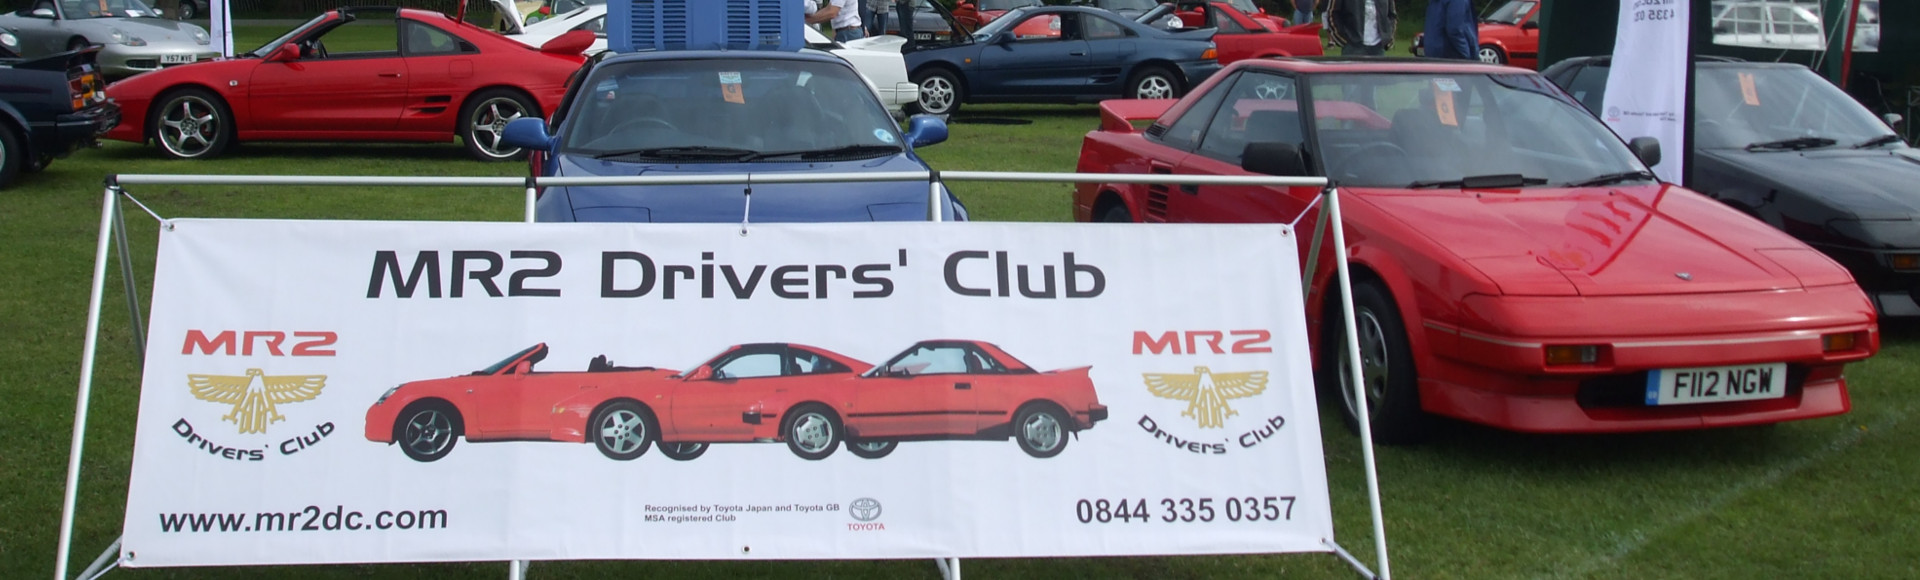 The MR2 Drivers' Club